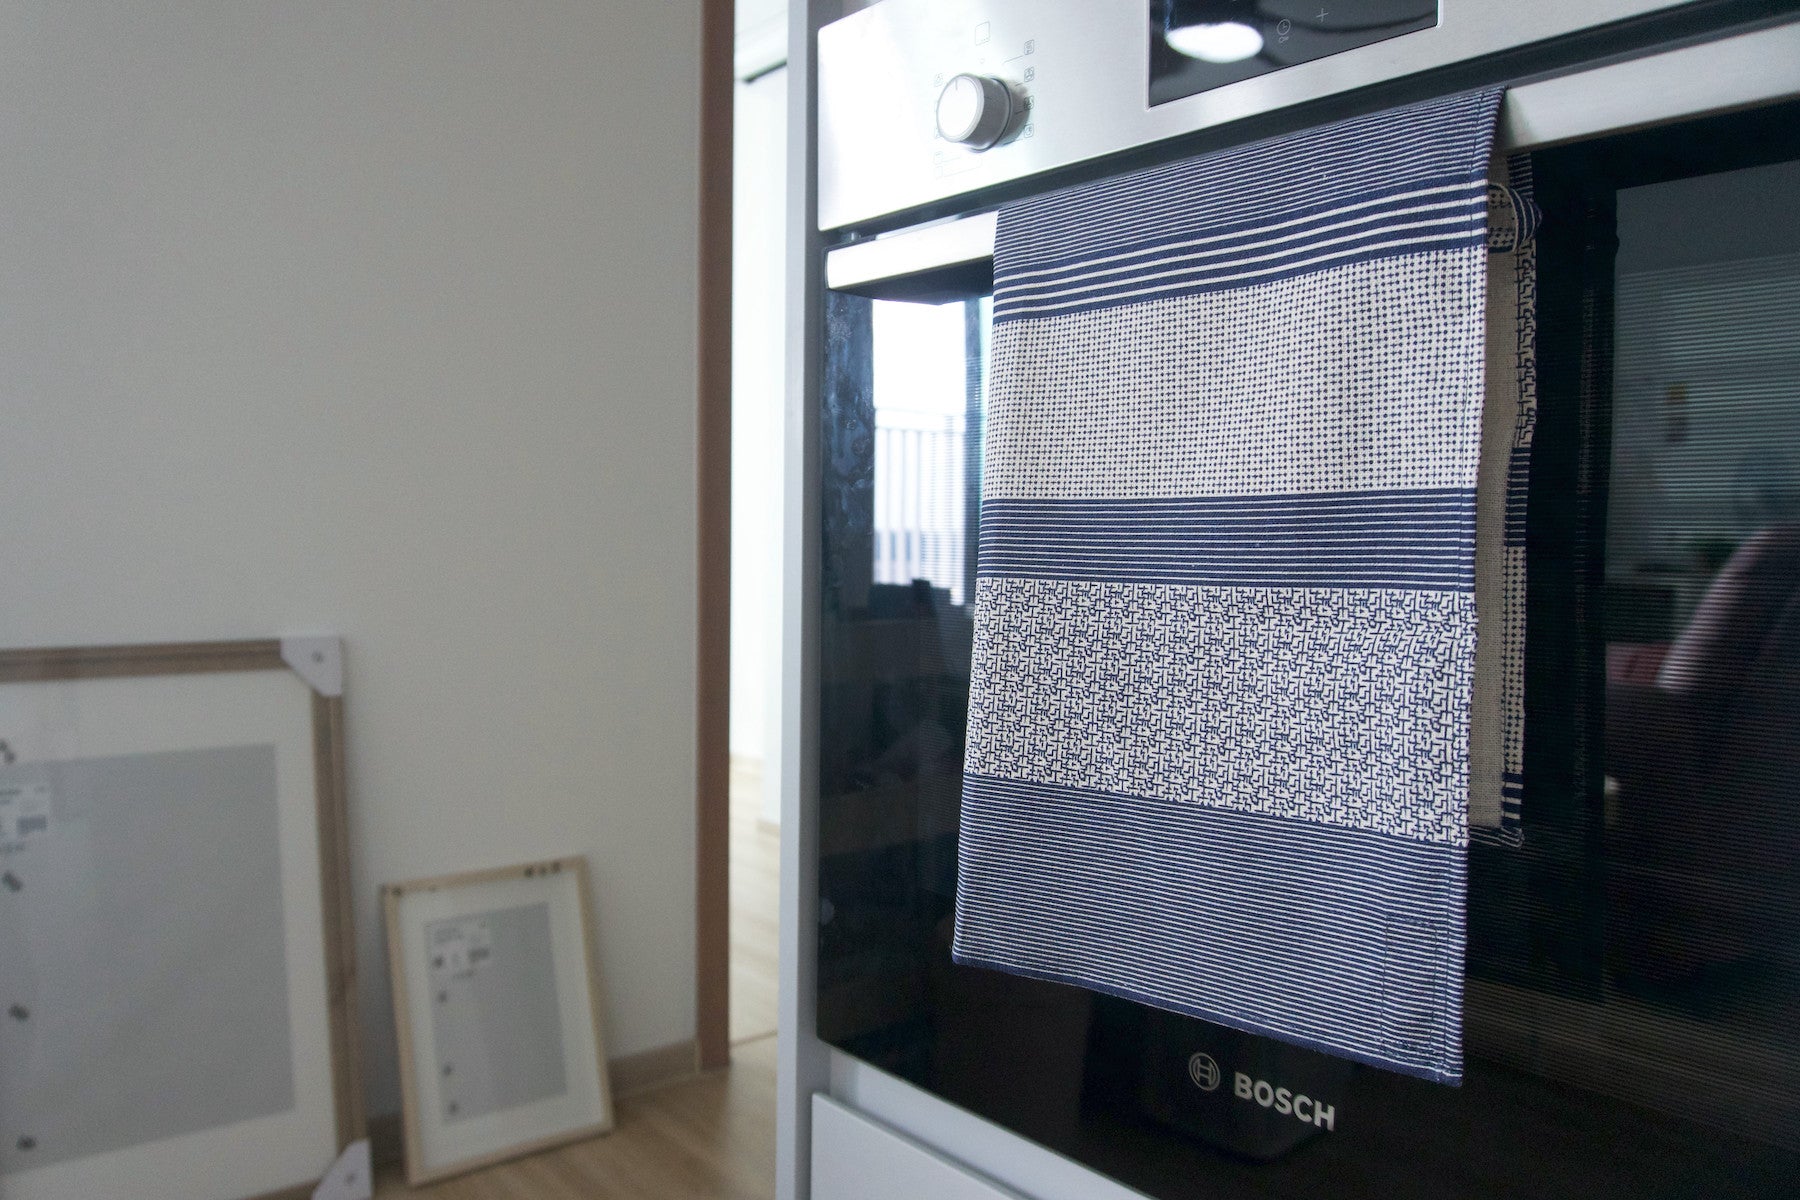 Thai Linen Homeware Set (Pattern: Hand/Tea Towel + Bathmat)